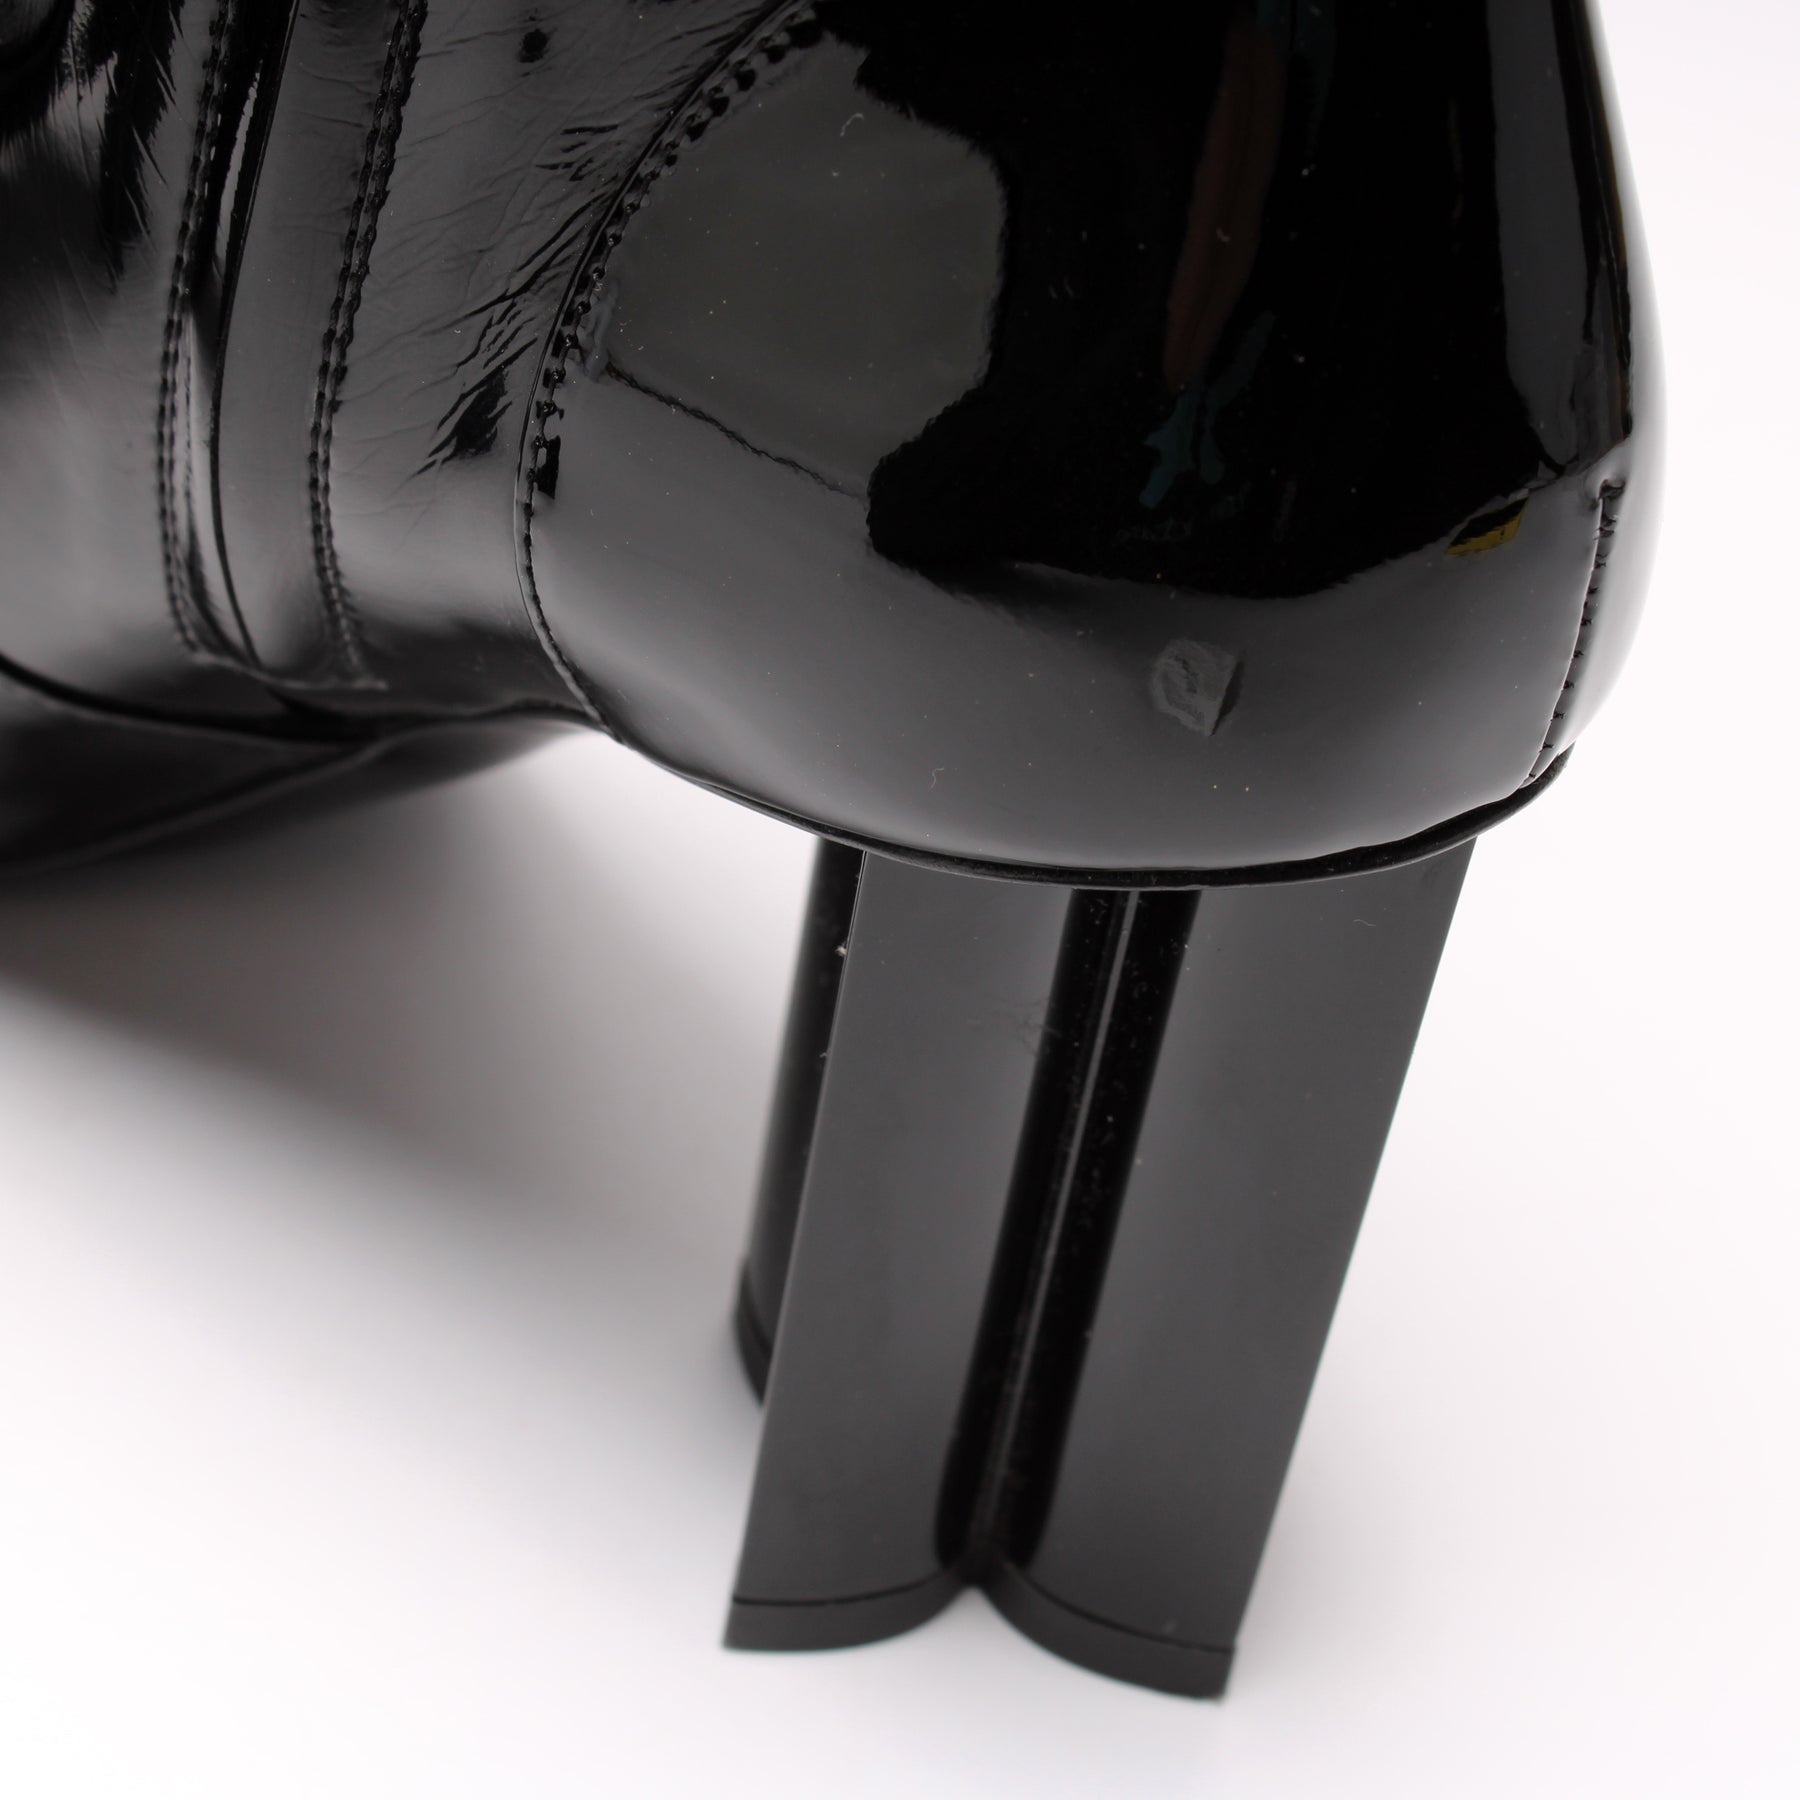 Louis Vuitton Silhouette Ankle Boot BLACK. Size 38.5